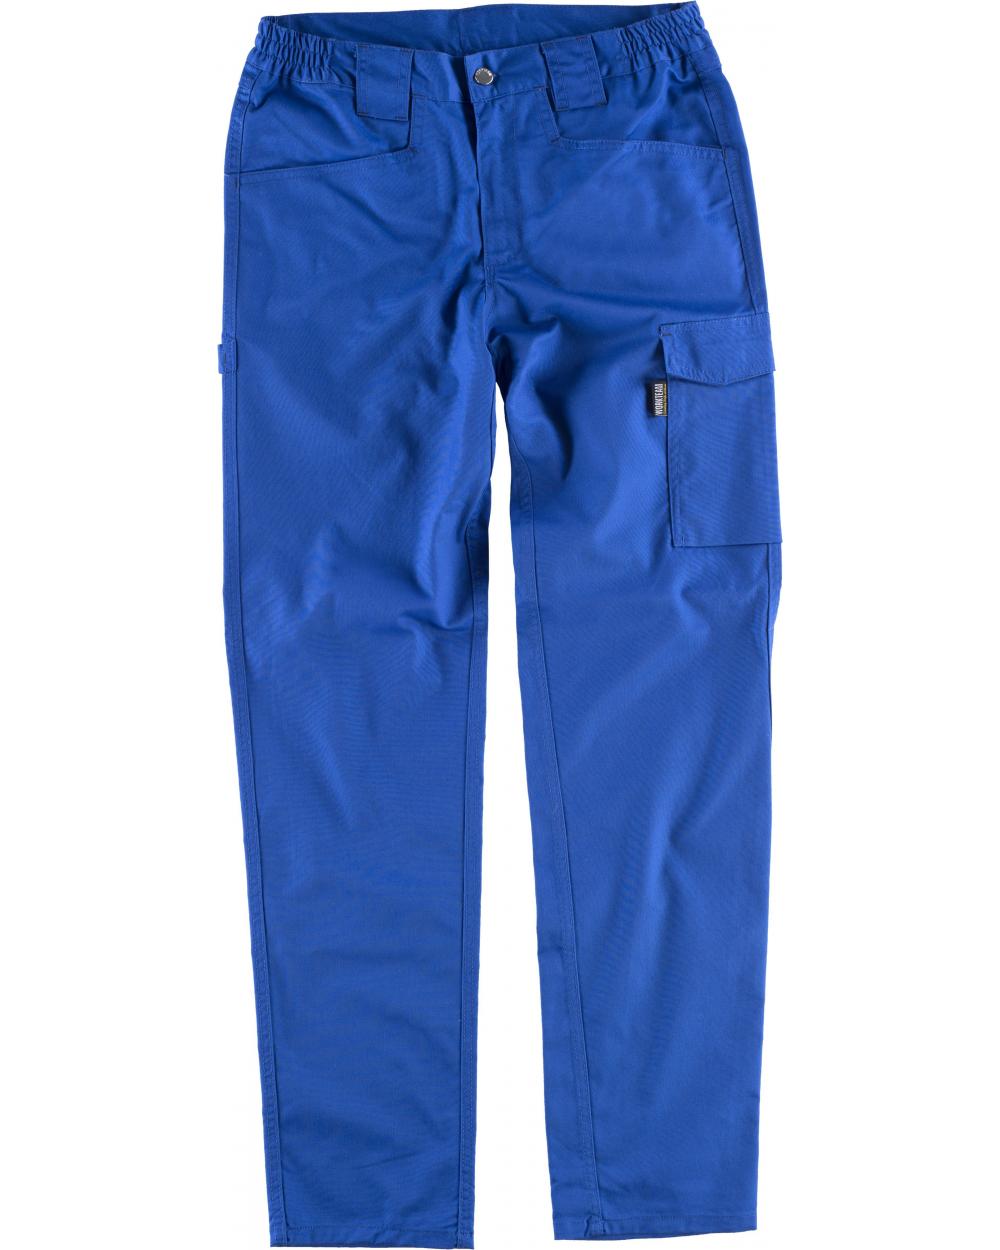 Comprar Pantalon elastico B4030 Azulina workteam delante